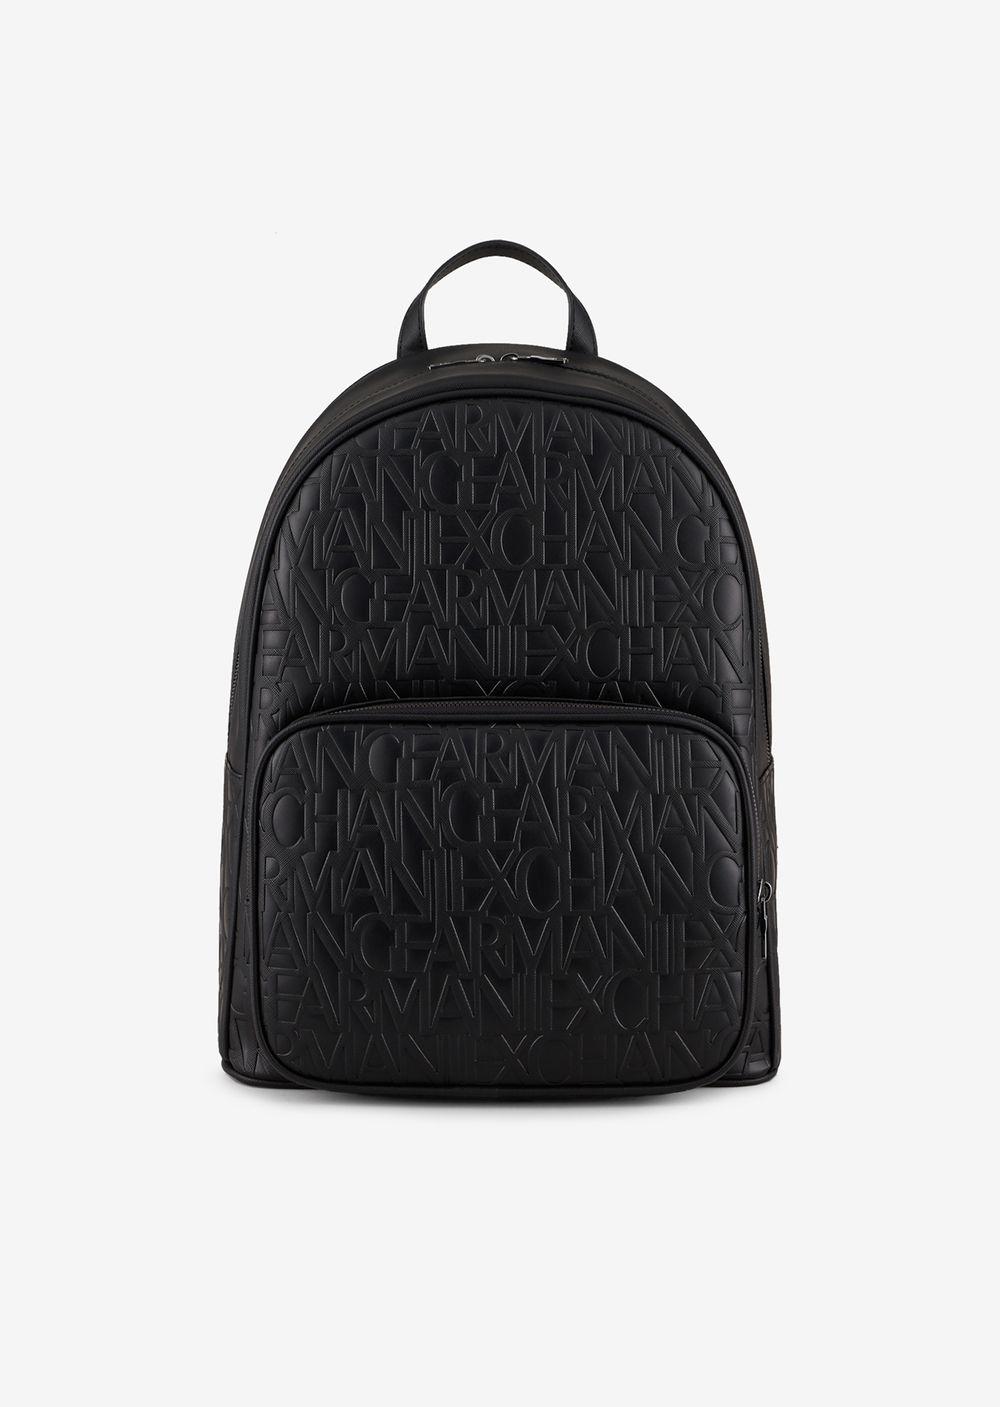 Armani Exchange Women's Leather Reversible Tote Bag - Black/Camel | Black  tote bag, Reversible tote bag, Bags